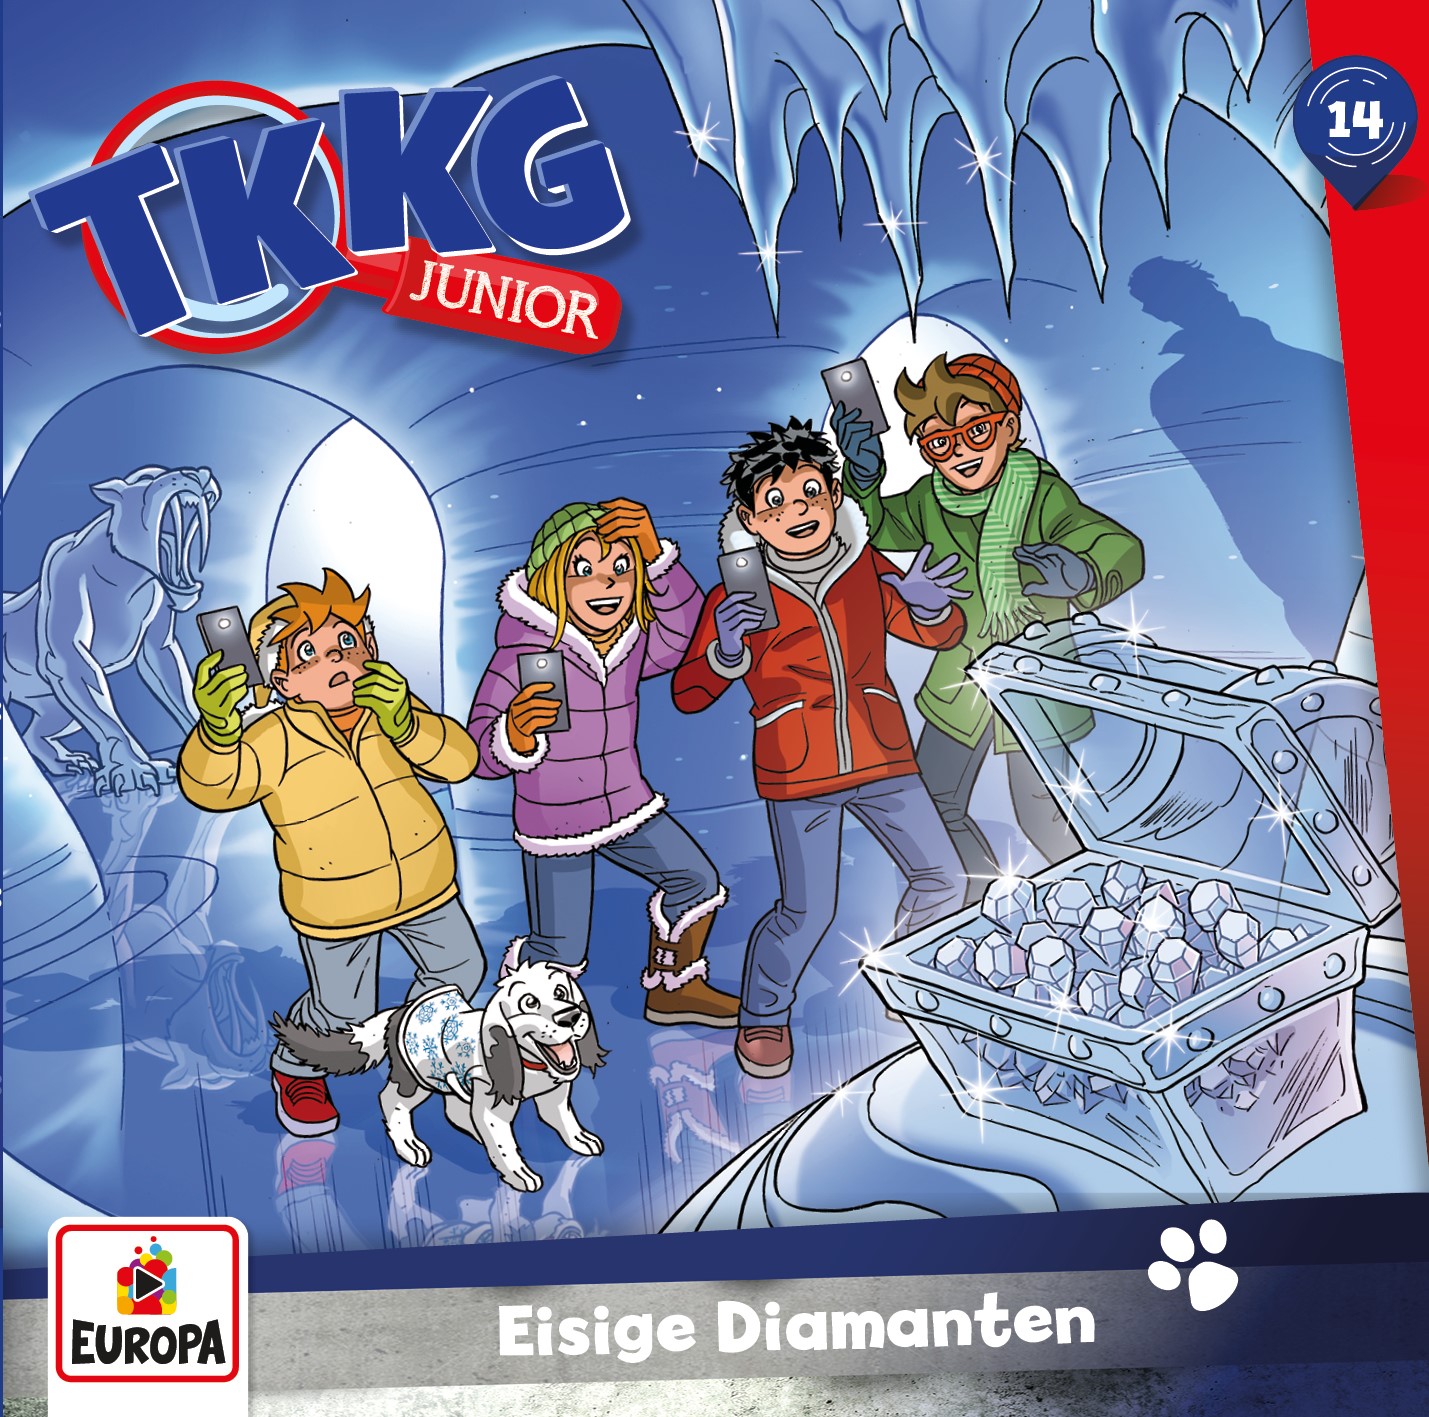 TKKG Junior Hörspiel, Folge 14: Eisige Diamanten